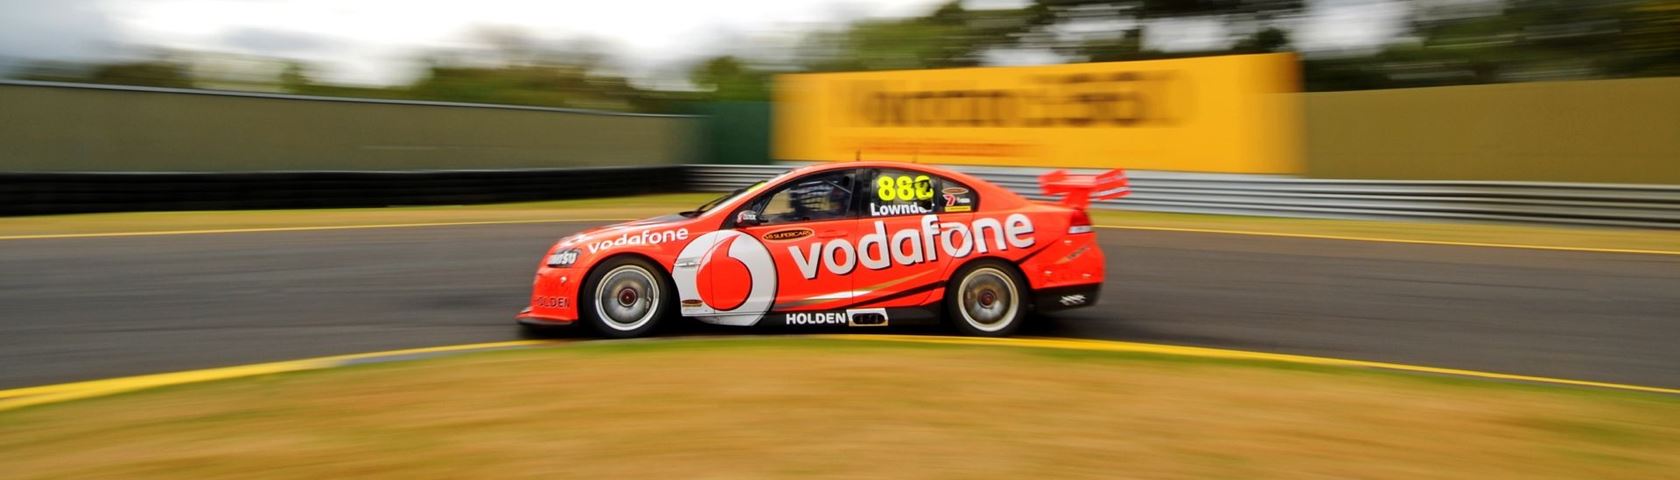 Vodafone V8 Supercar